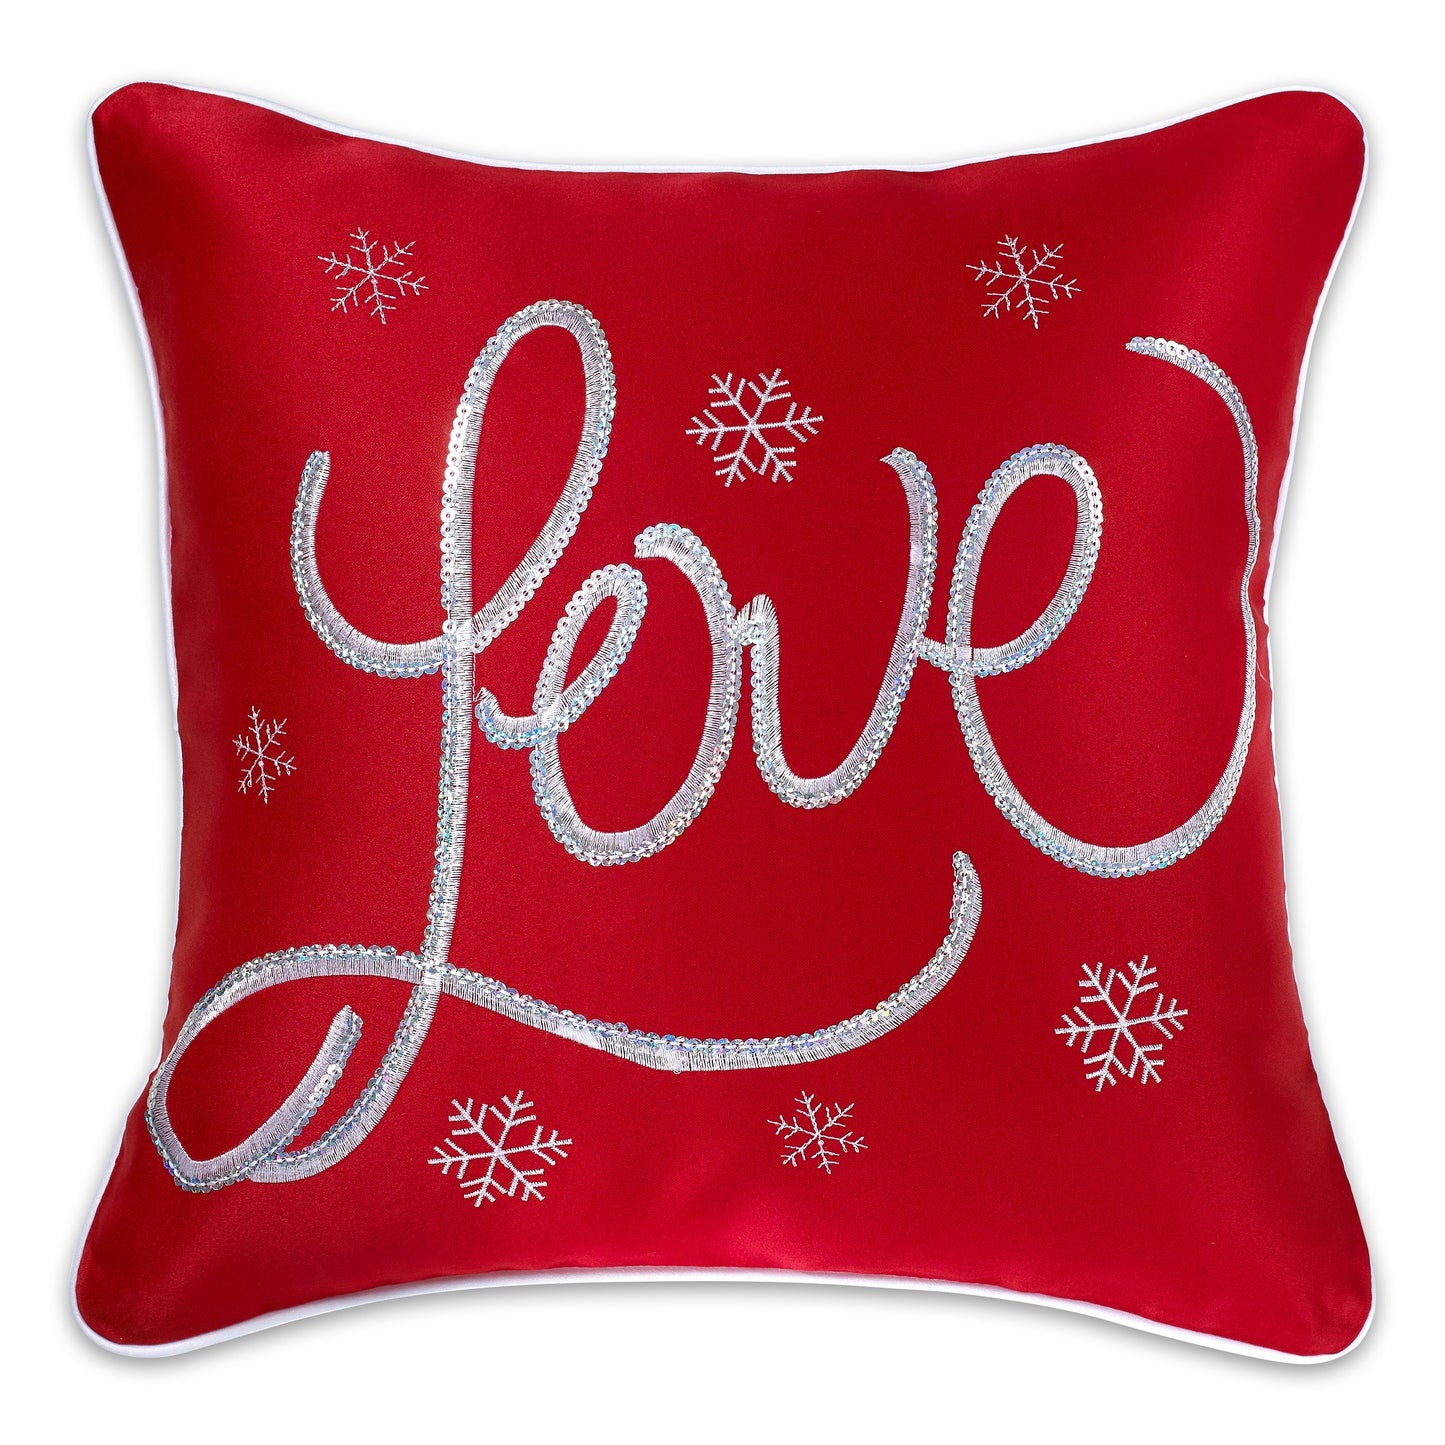 Seasonal Christmas Favorties Decorative Accent Throw Pillow